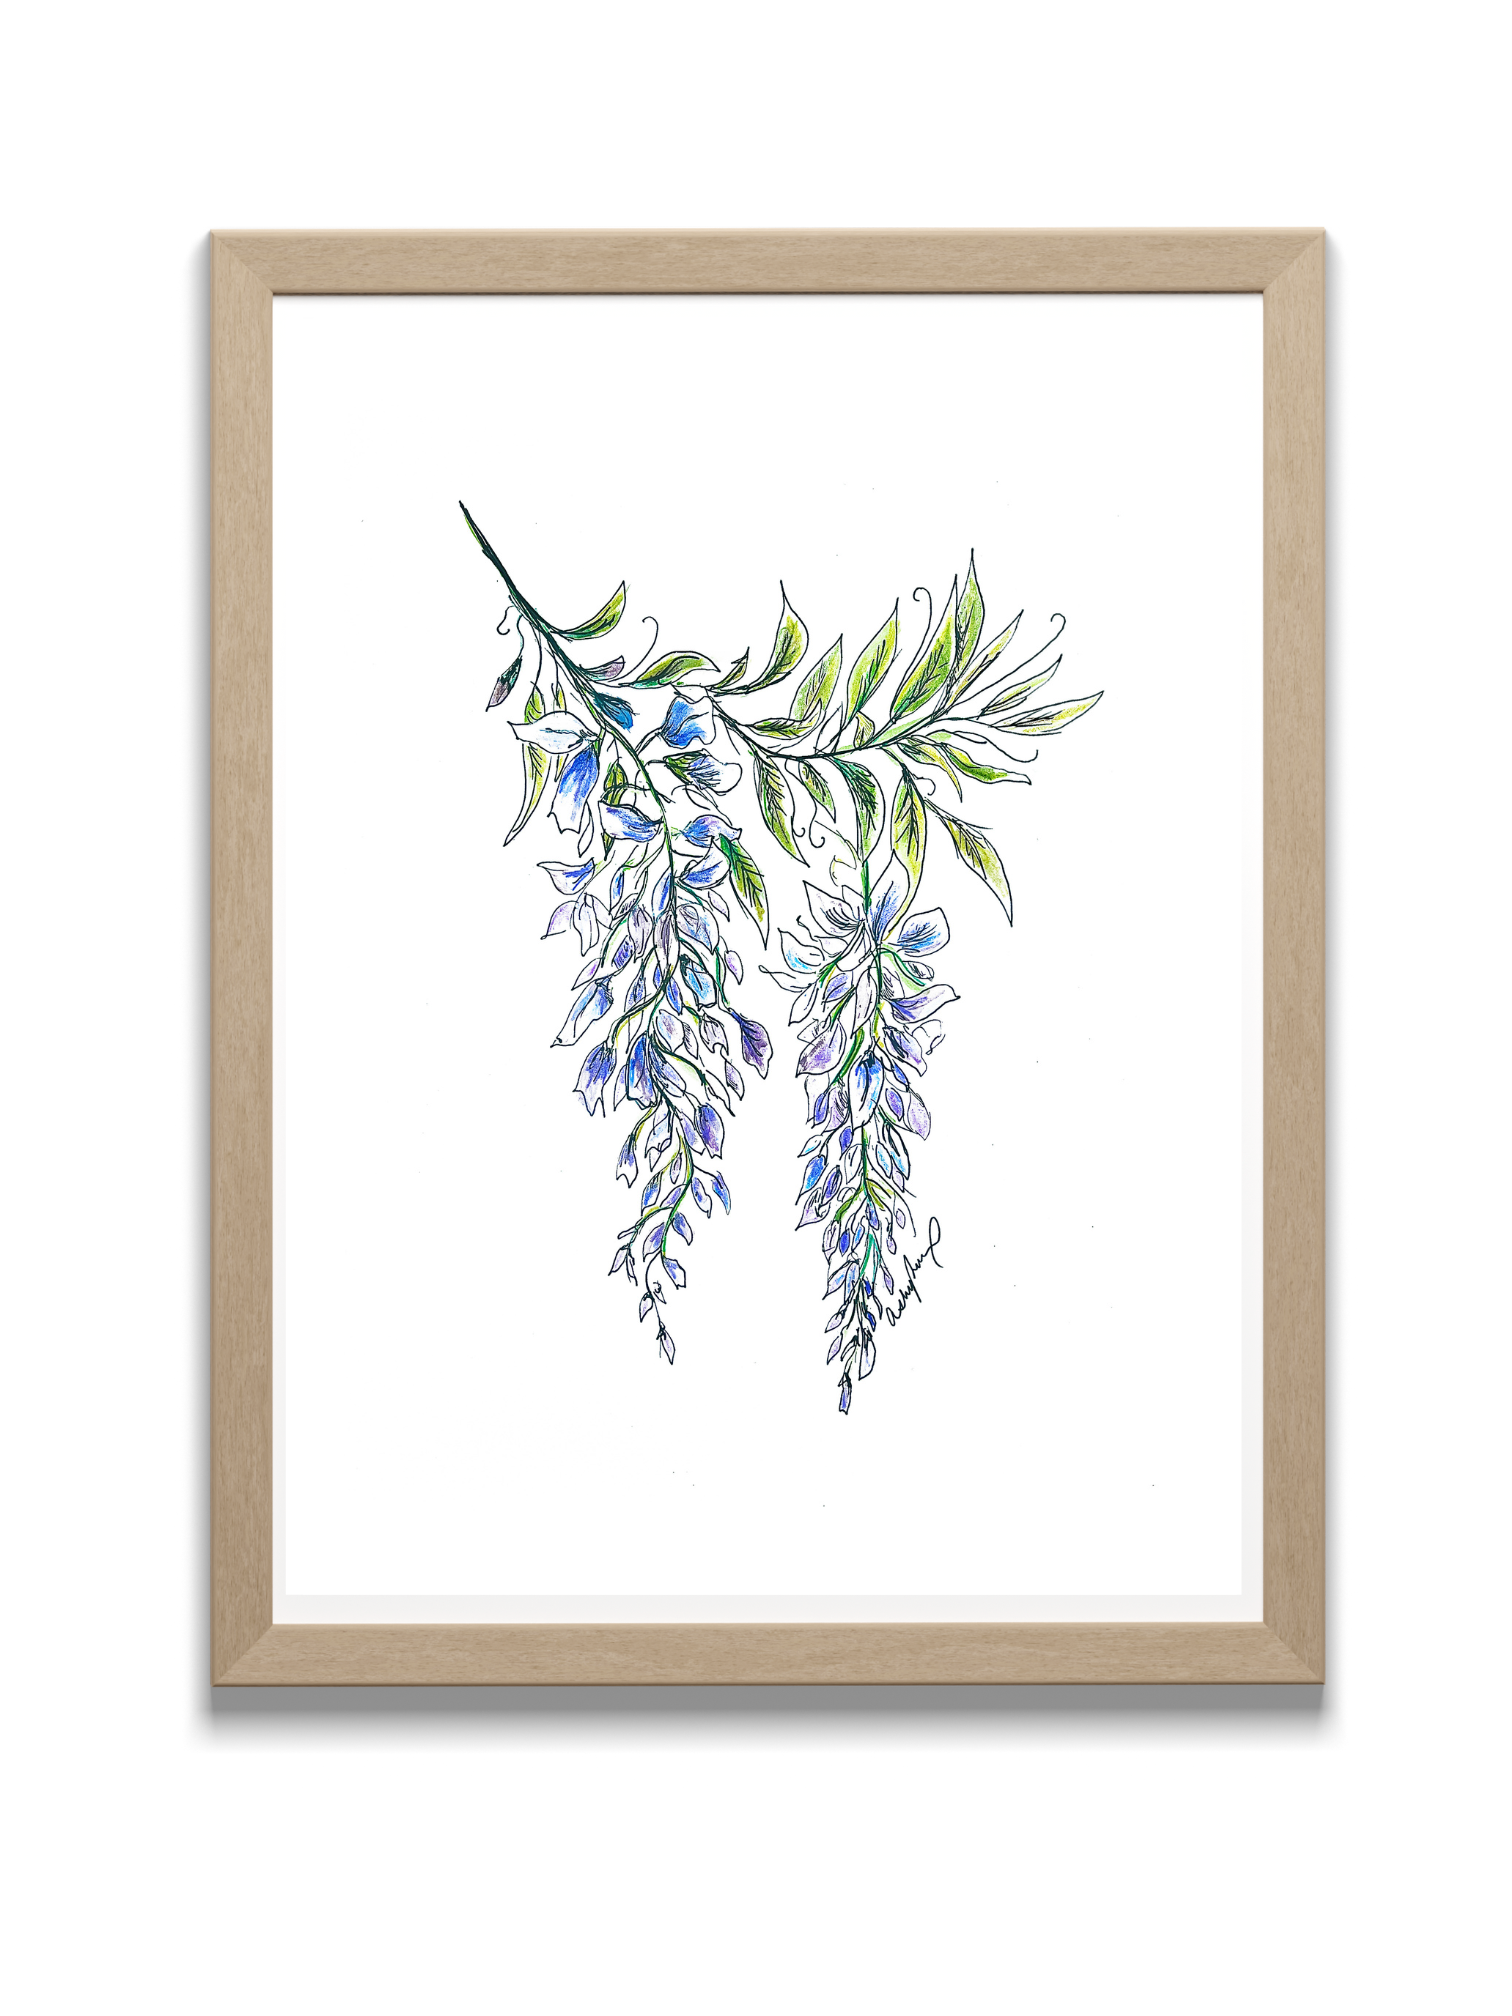 wisteria art print in frame